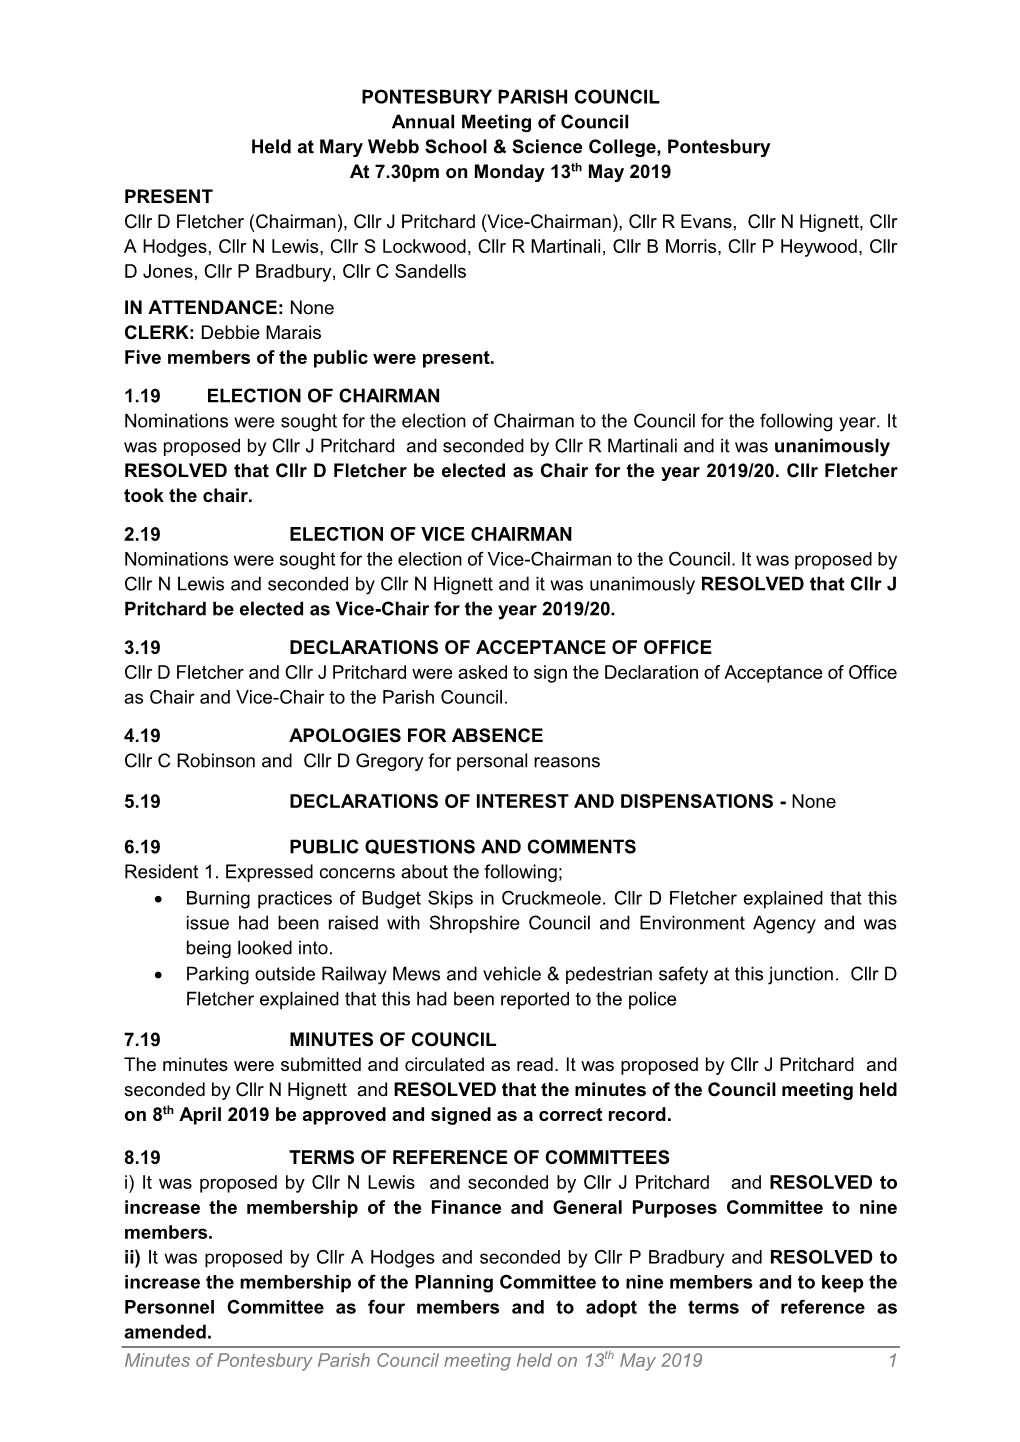 Minutes of Pontesbury Parish Council Meeting Held on 13Th May 2019 1